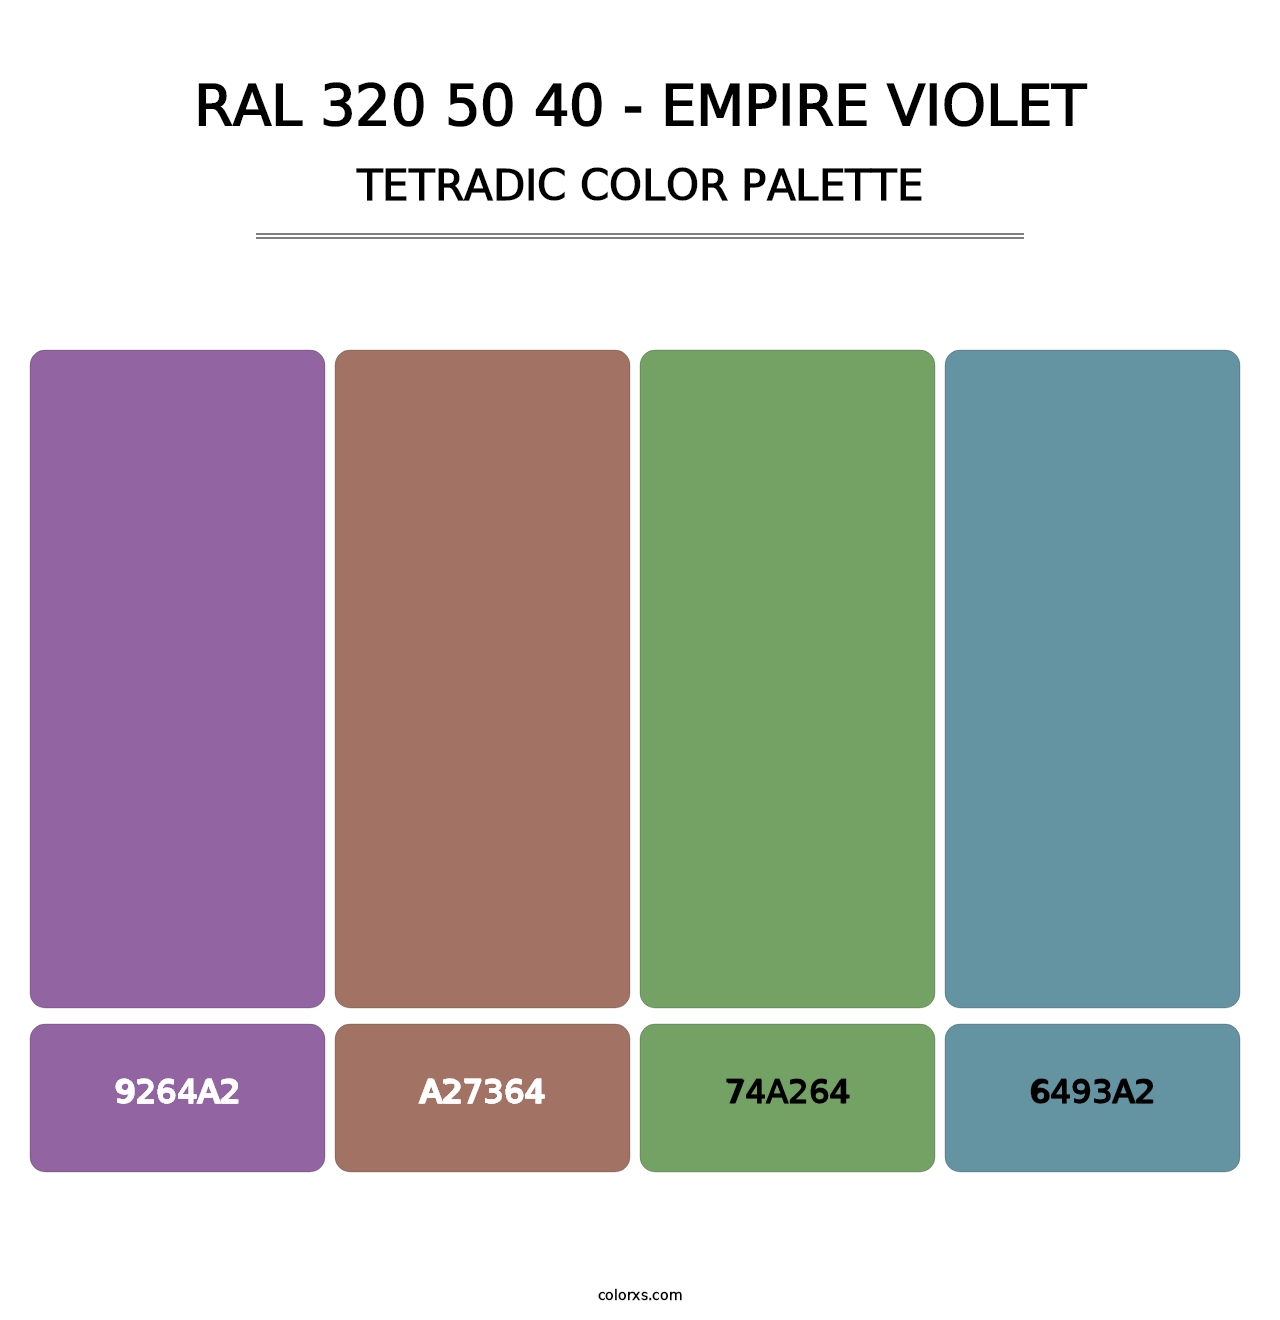 RAL 320 50 40 - Empire Violet - Tetradic Color Palette